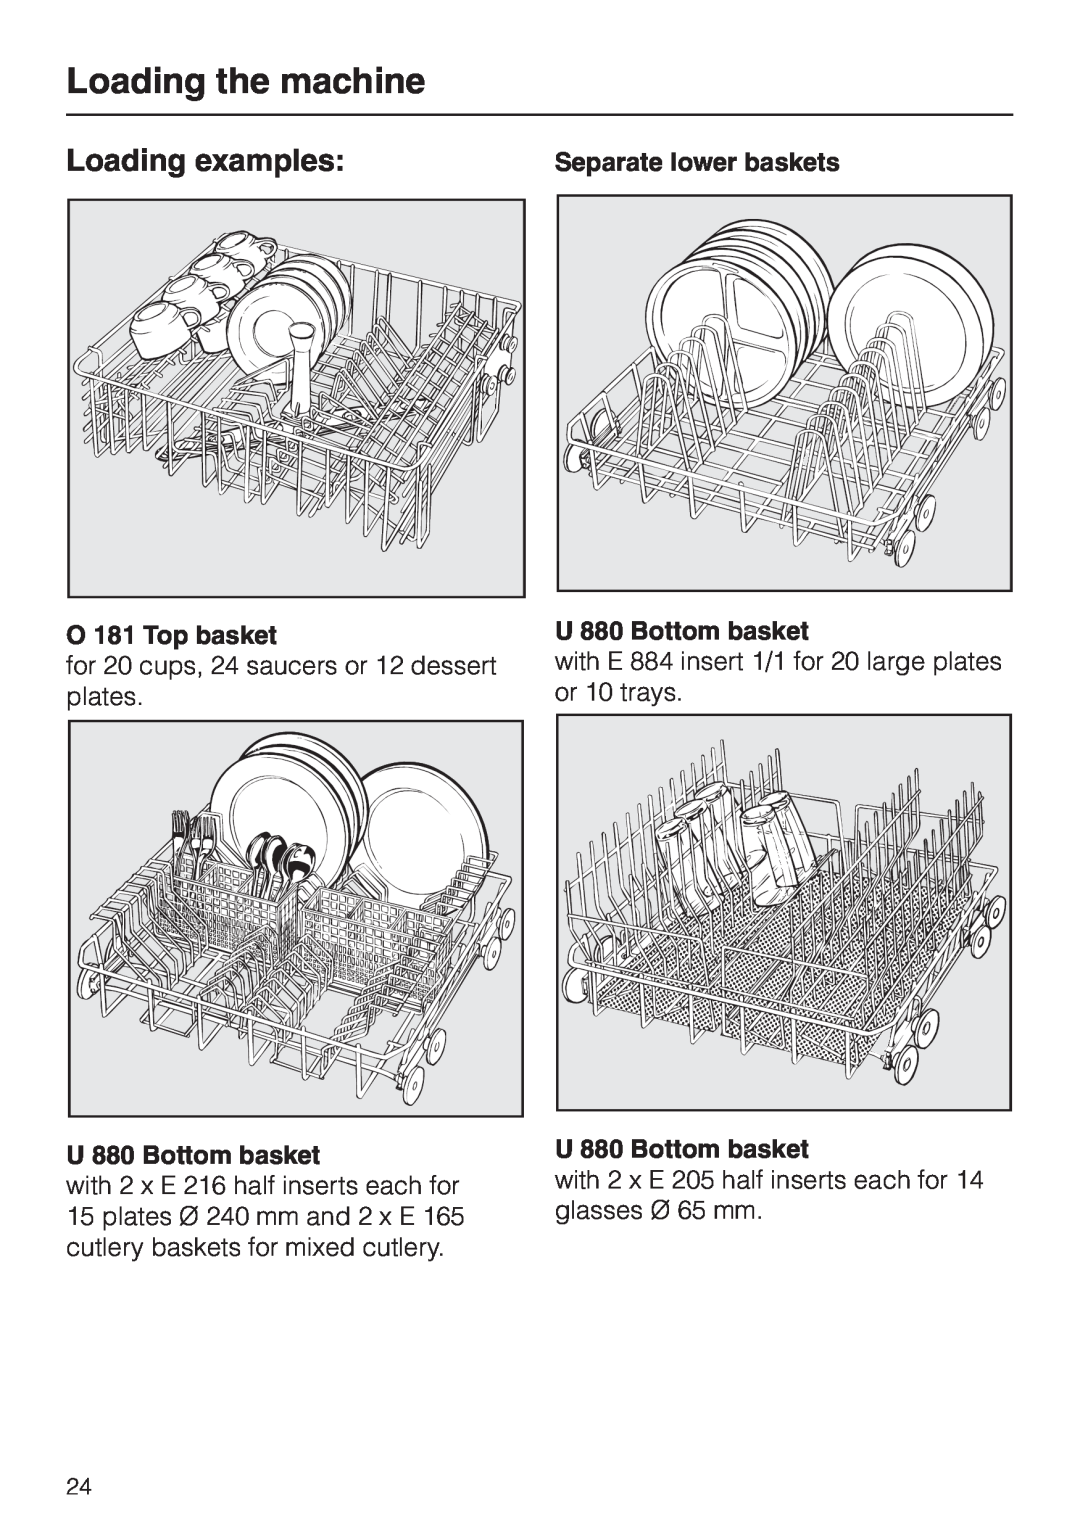 Miele G 7860 Loading examples, O 181 Top basket, Separate lower baskets U 880 Bottom basket, Loading the machine 